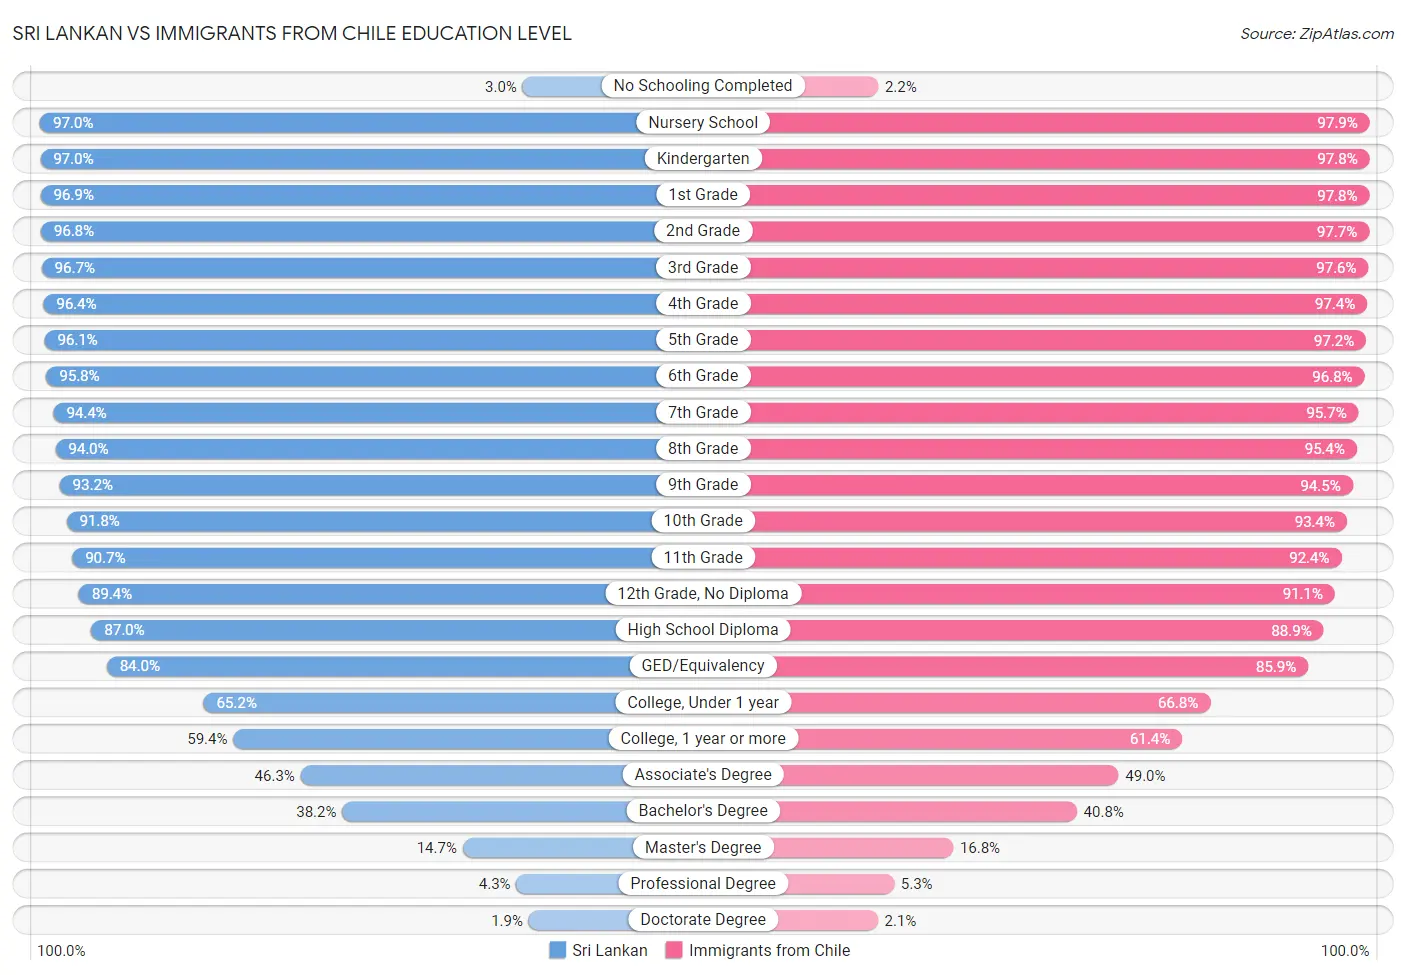 Sri Lankan vs Immigrants from Chile Education Level